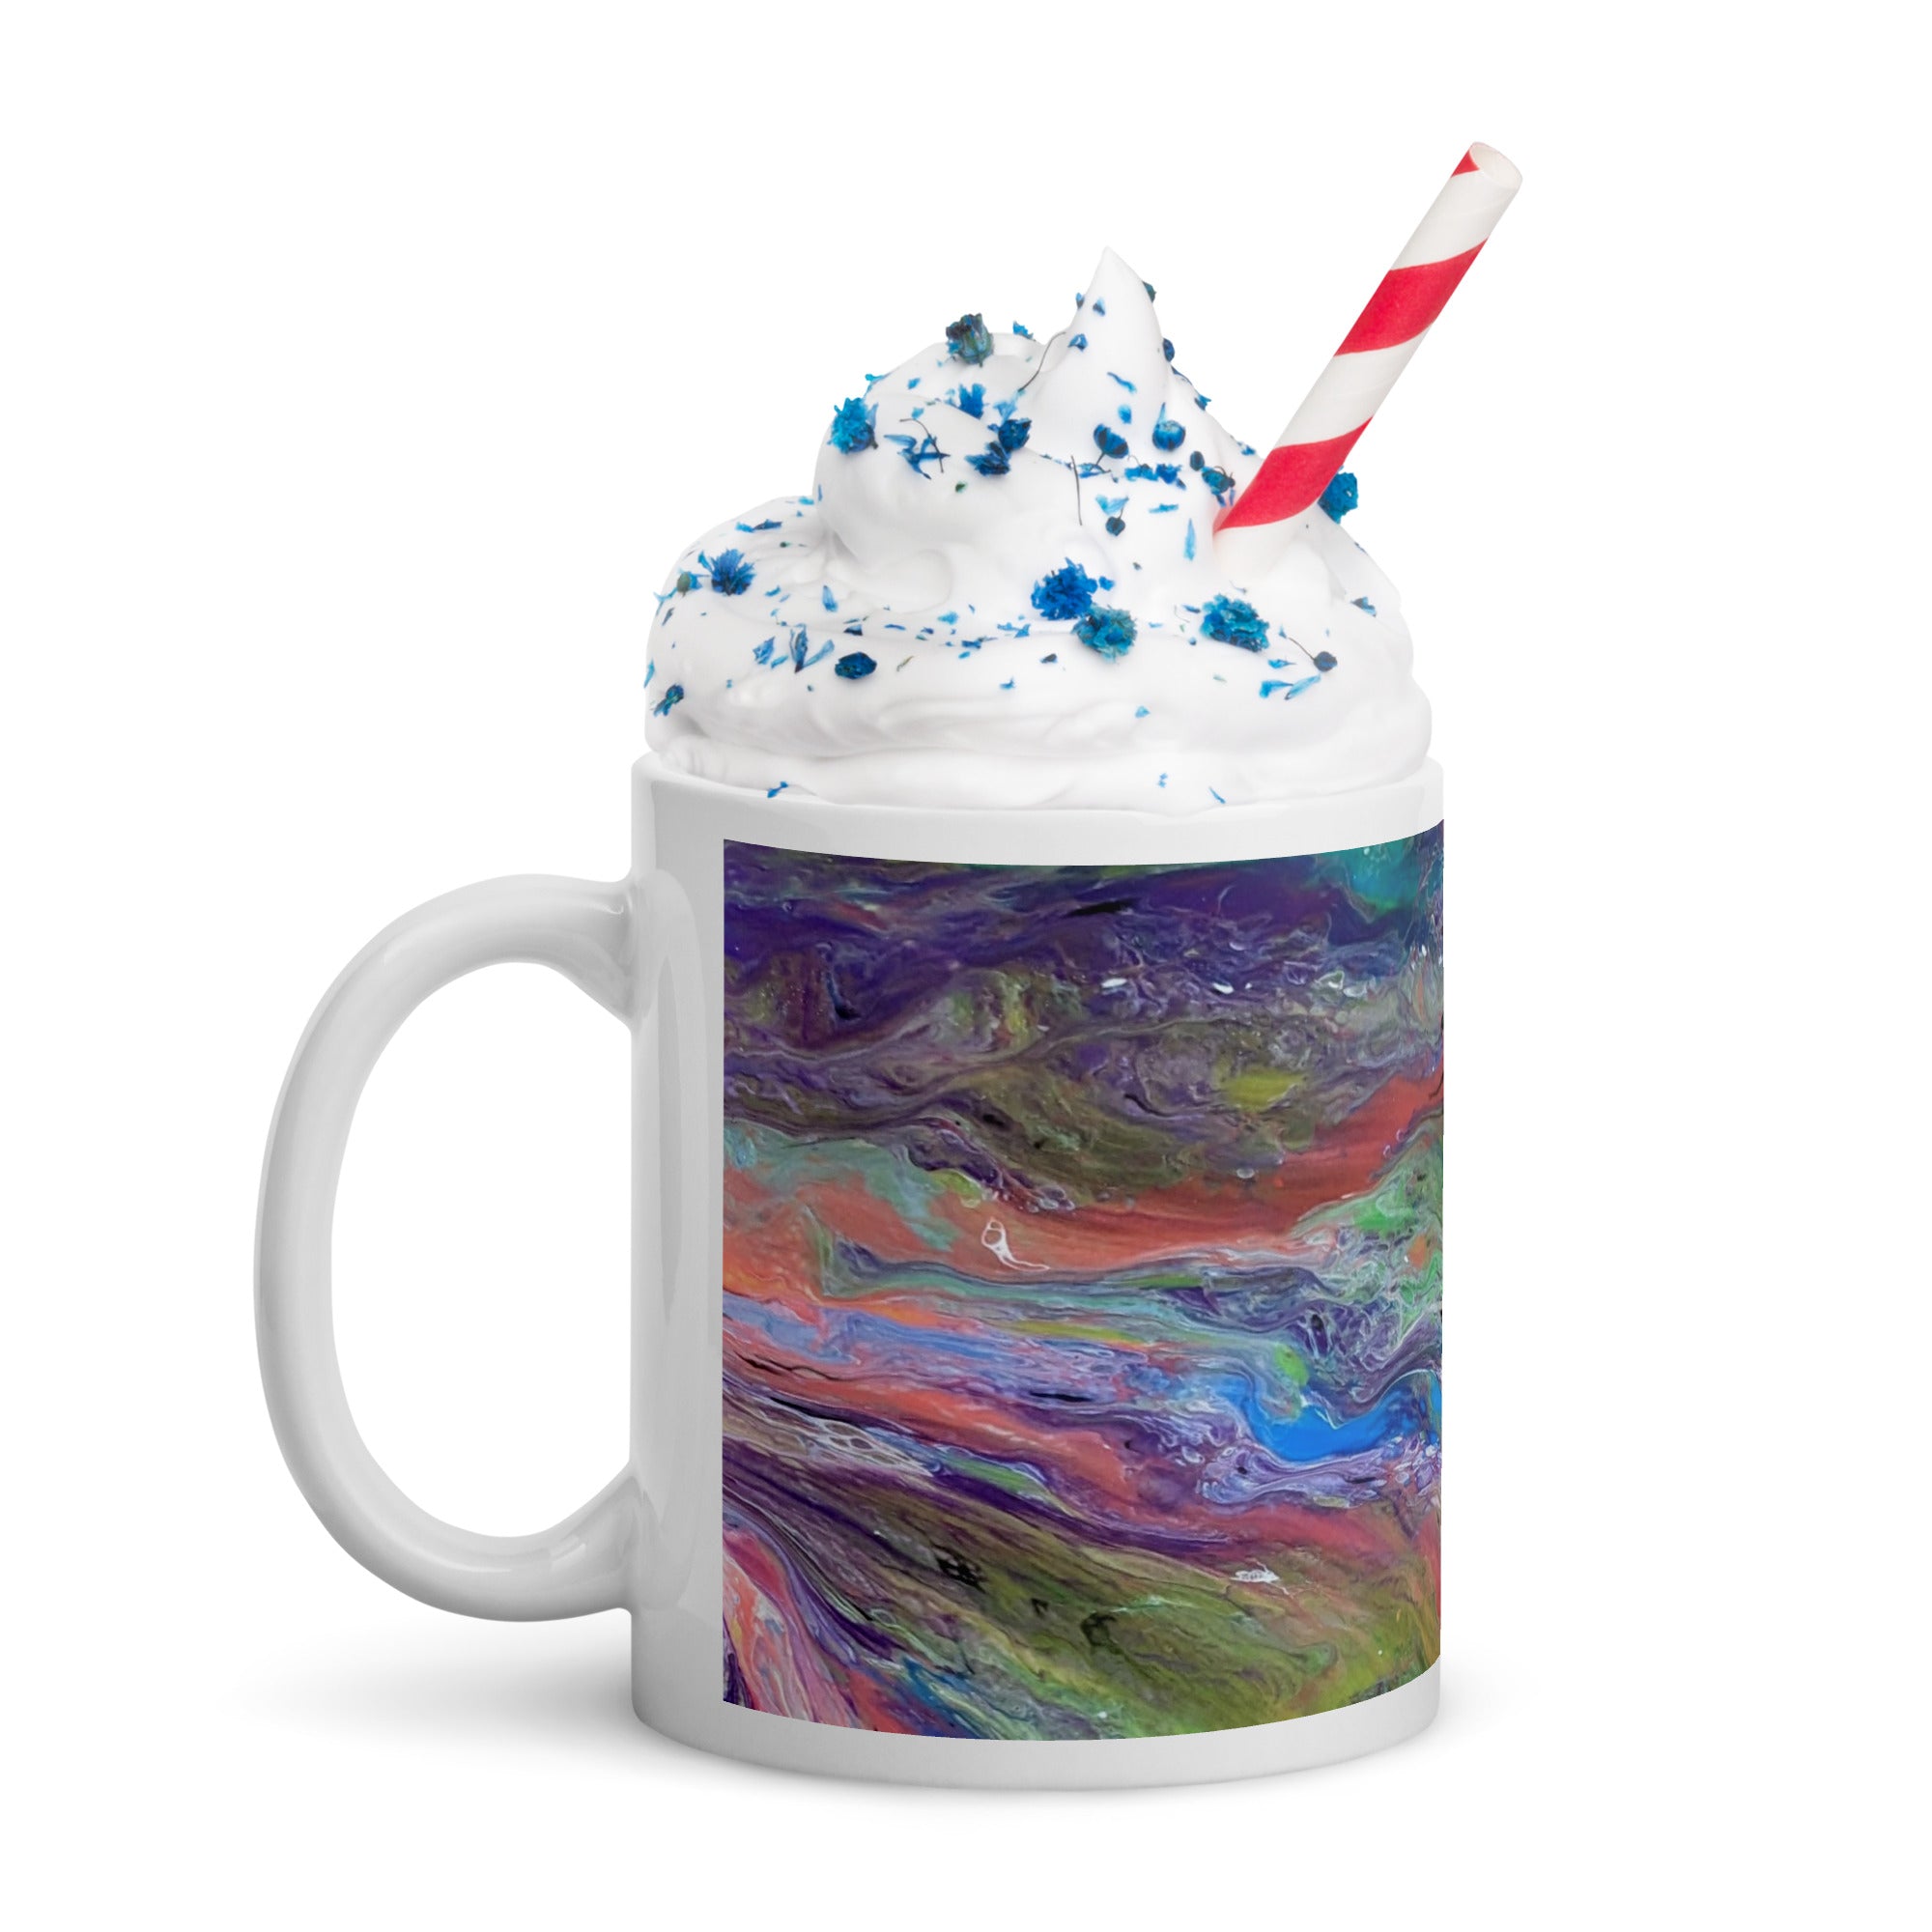 Rainbow's Peak Pour Painting Ceramic Mug, Glossy Mug, Fluid Art, Acrylic Pour Painting, Abstract Art, Gift, Paint Mug, Coffee Cup, Drinkware